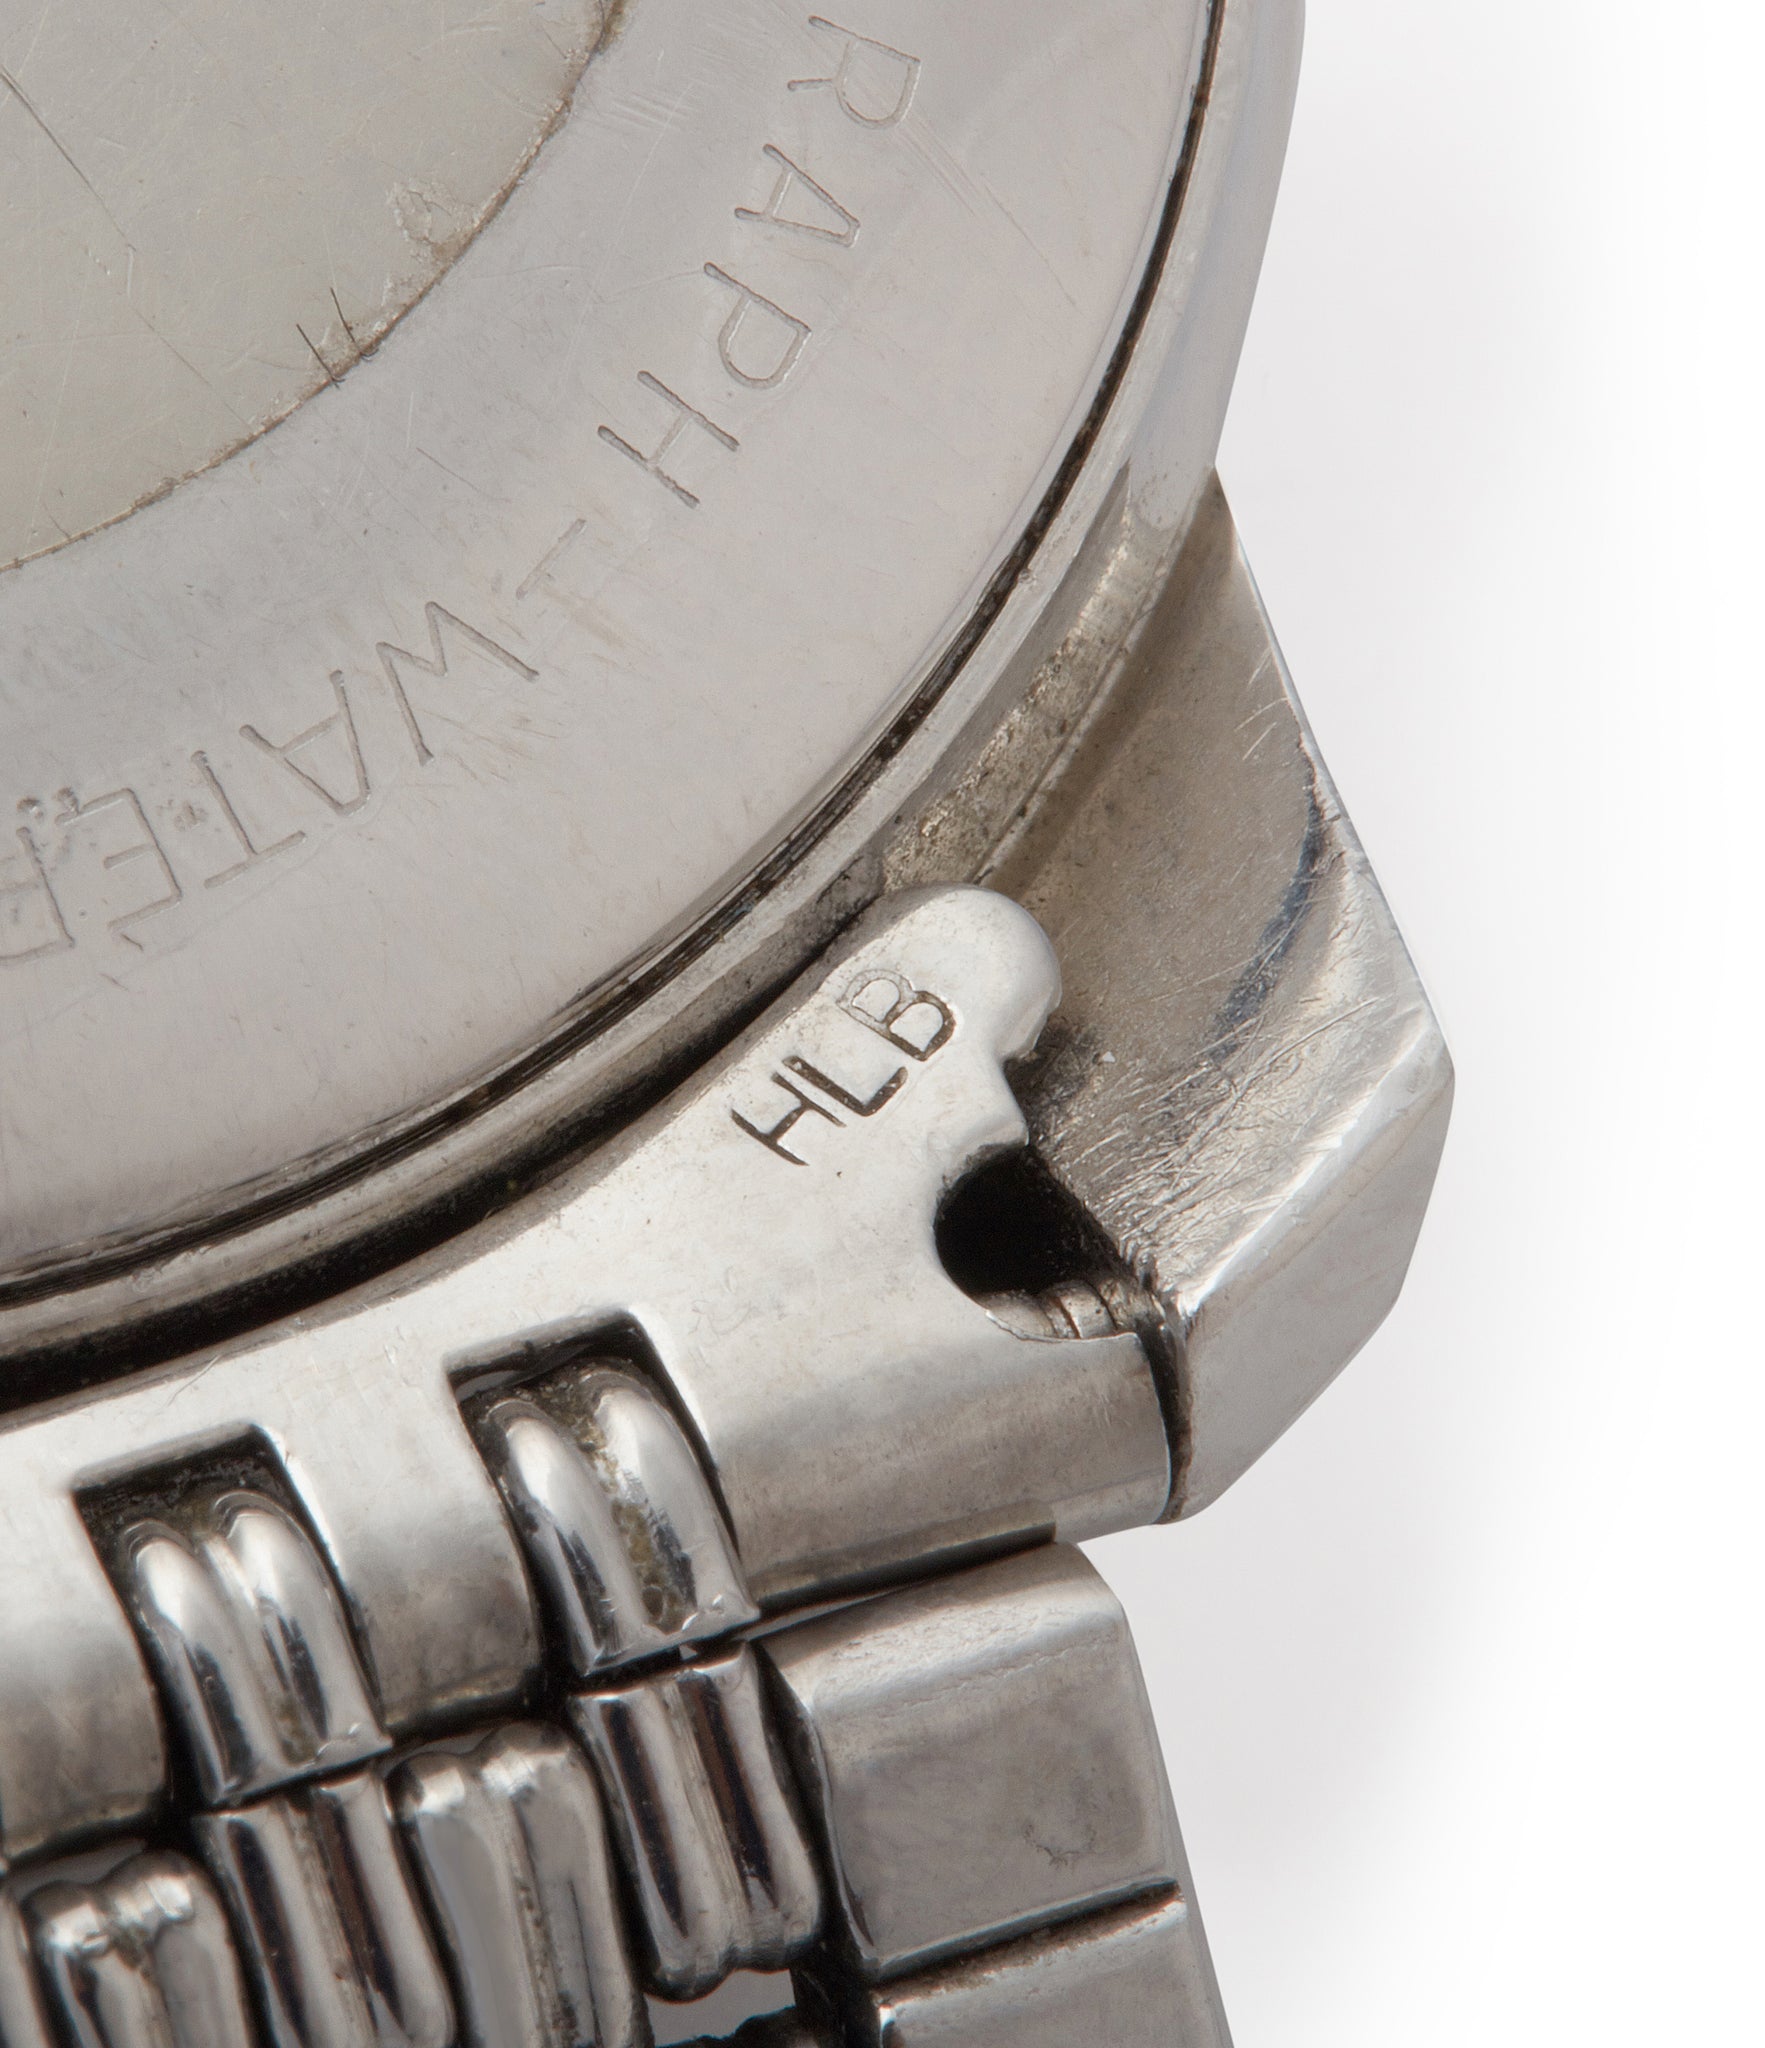 2446 C SN Heuer Autavia silver dial rare chronograph test dial Valjoux 72 watch